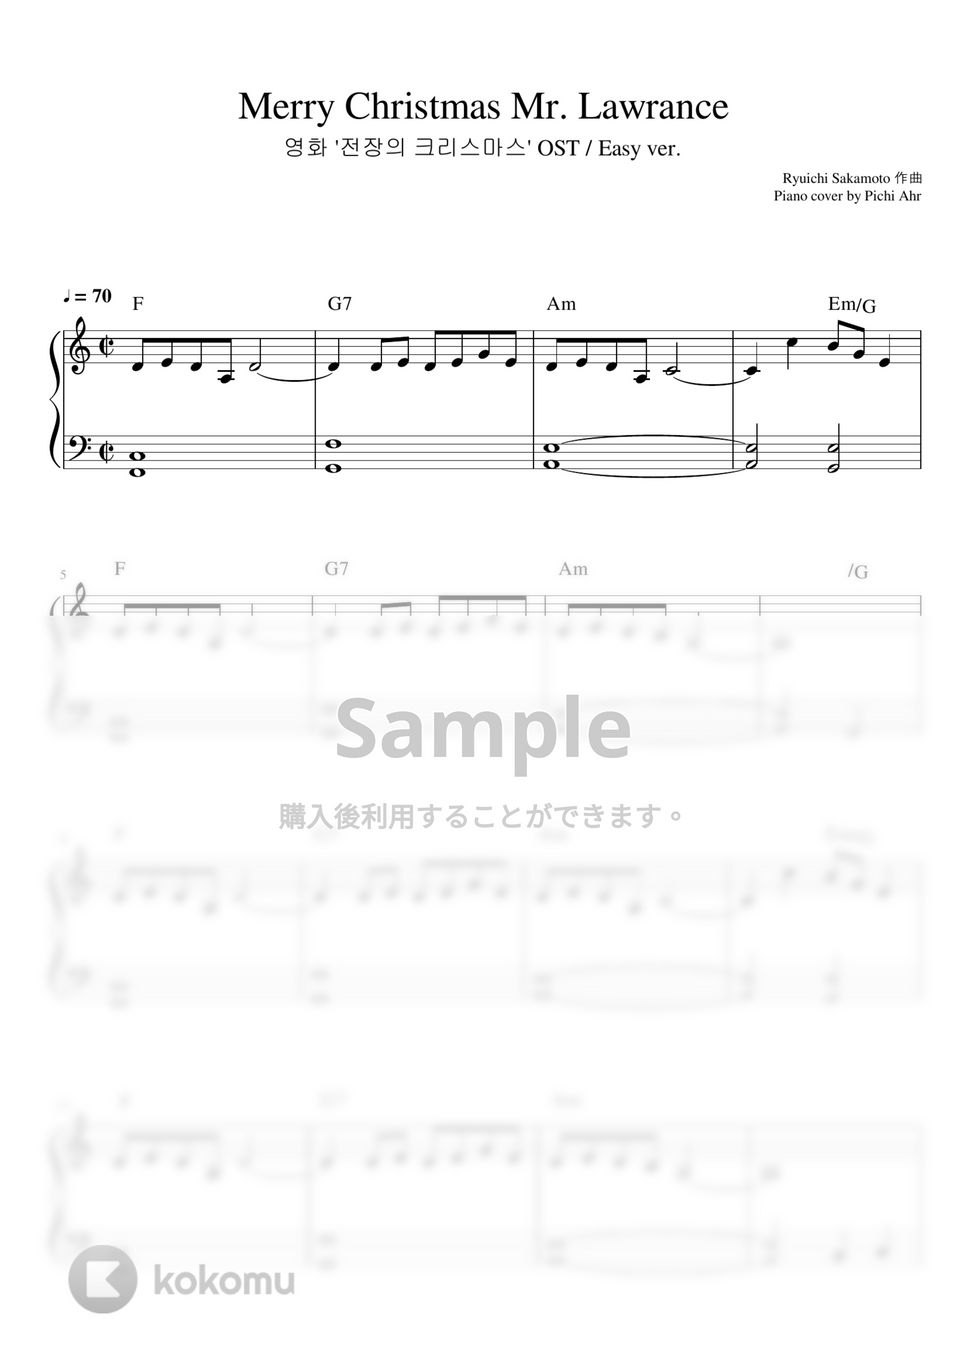 Ryuichi Sakamoto - Merry Christmas, Mr. Lawrence (easy ver.) by Pichi Ahr